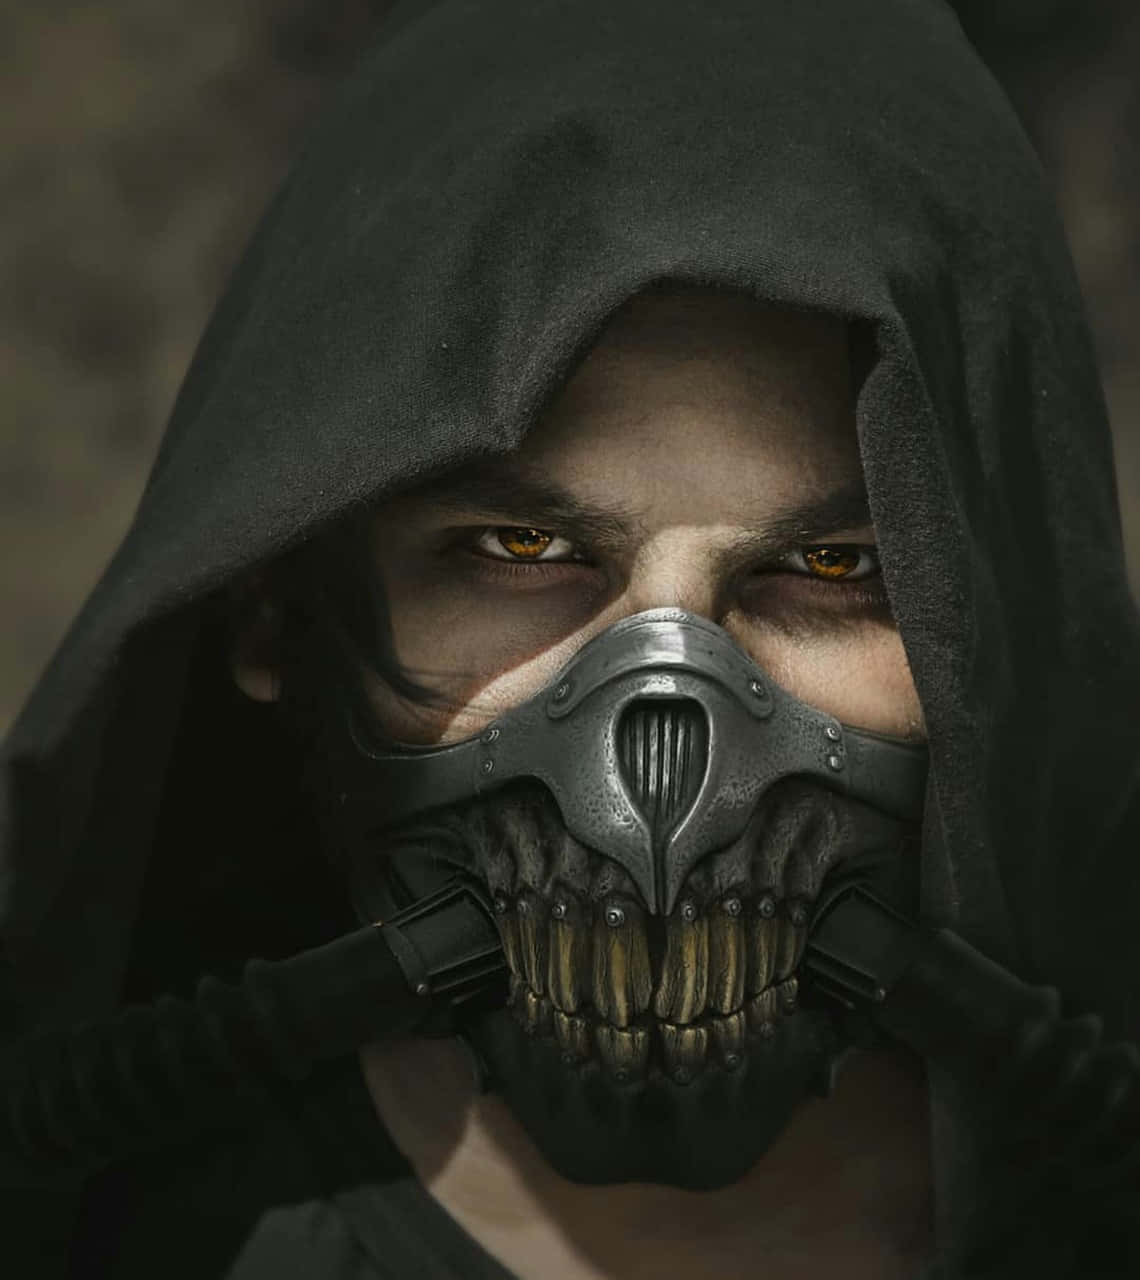 Black Hood Mask Man Picture